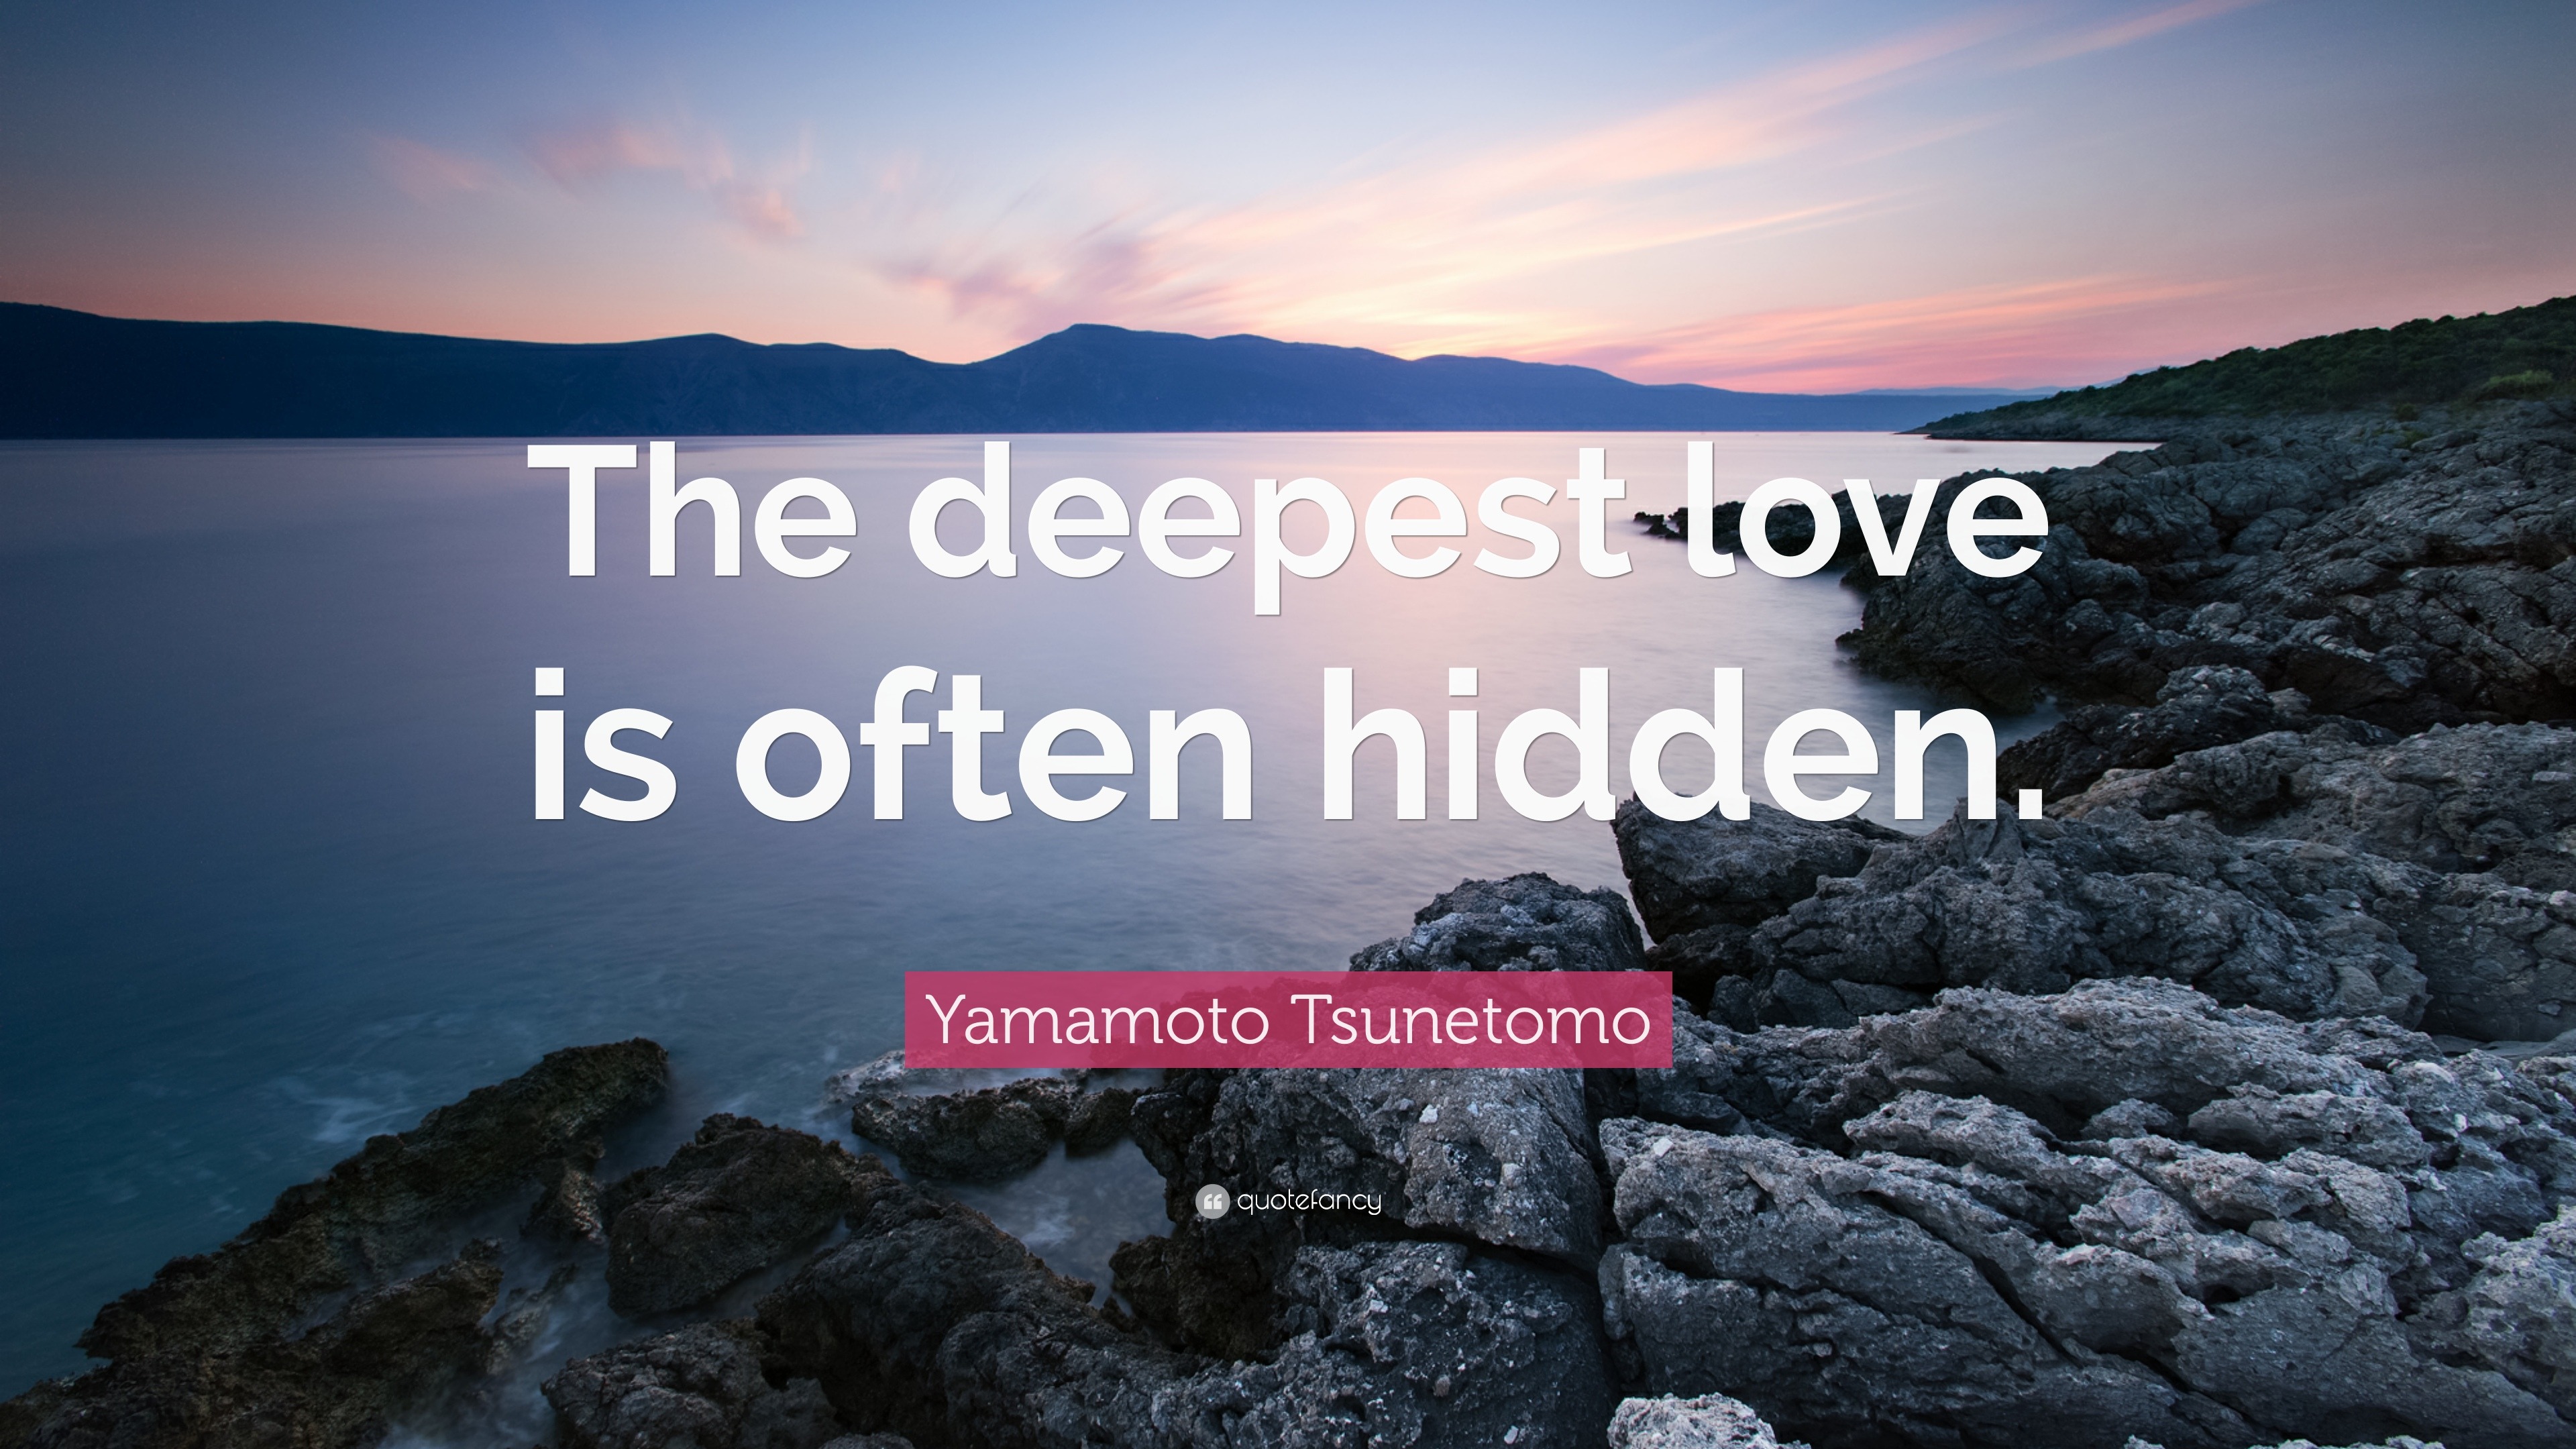 Yamamoto Tsunetomo Quote “The deepest love is often hidden ”